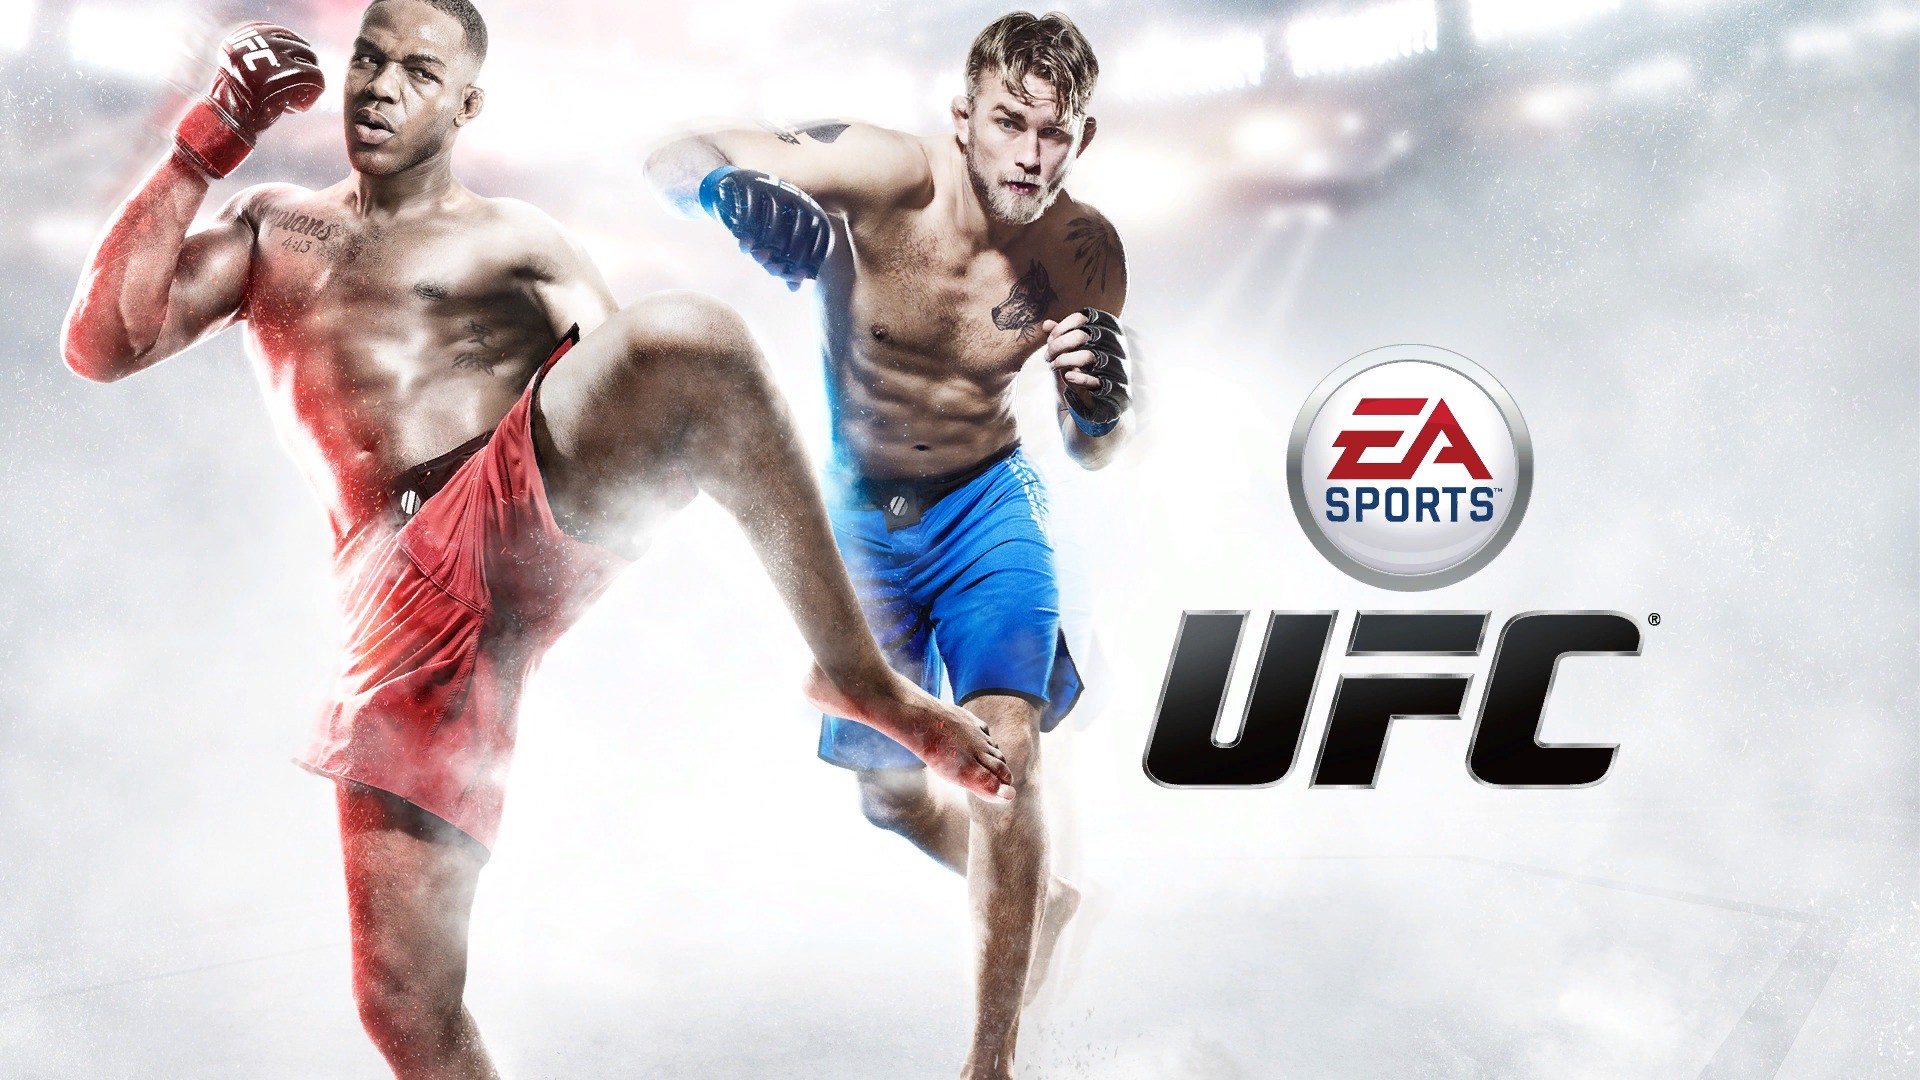 People 1920x1080 EA Sports UFC UFC Jon Jones EA Sports men sport video games Electronic Arts Alexander Gustafsson